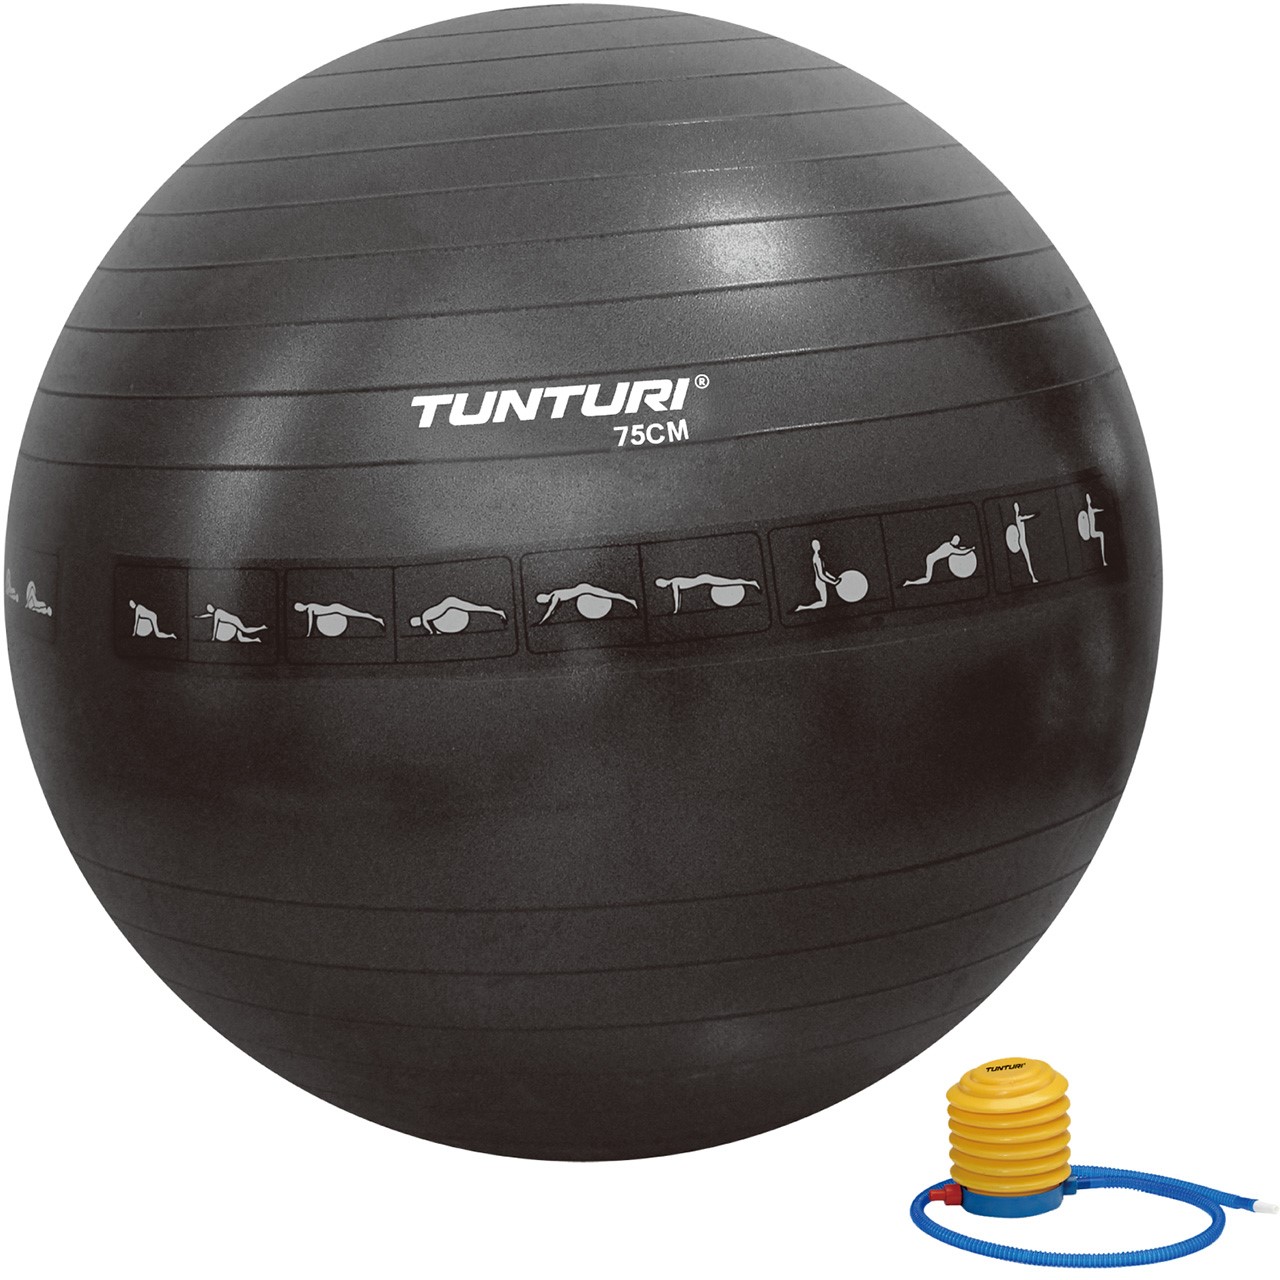 Tunturi Anti-Burst Gym Ball 75 cm